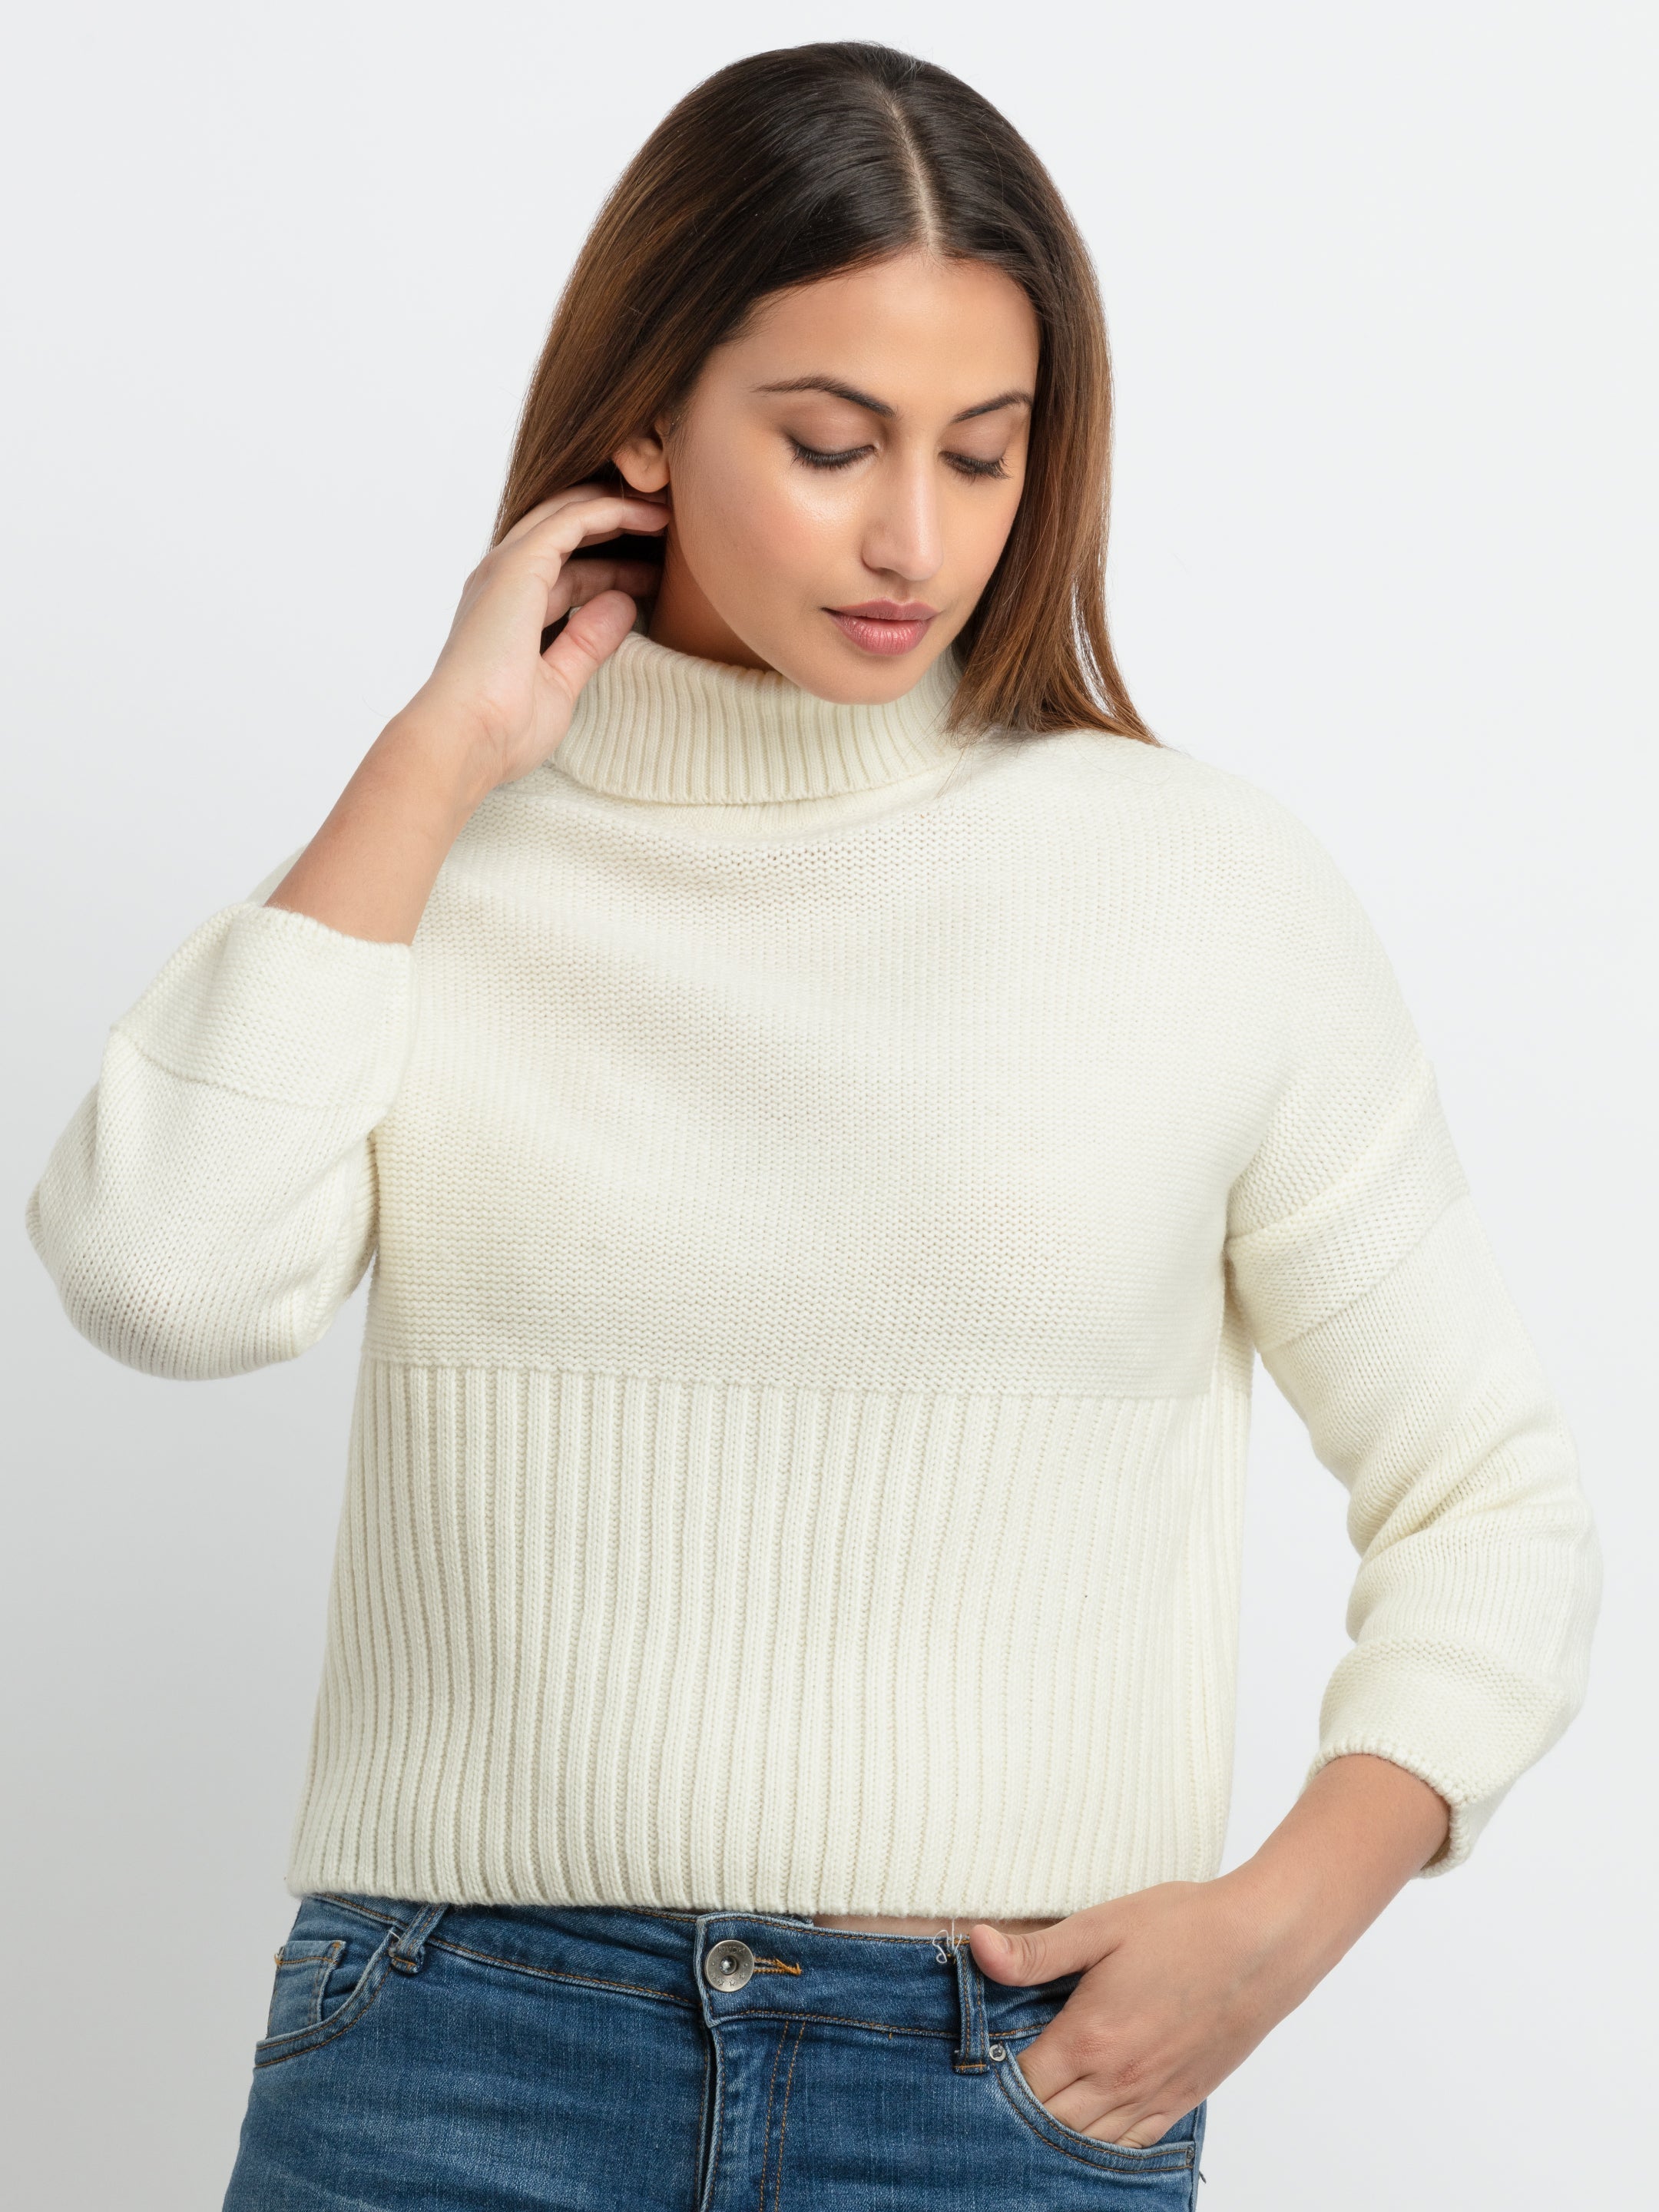 Buy Off White Turtleneck Sweater for Women